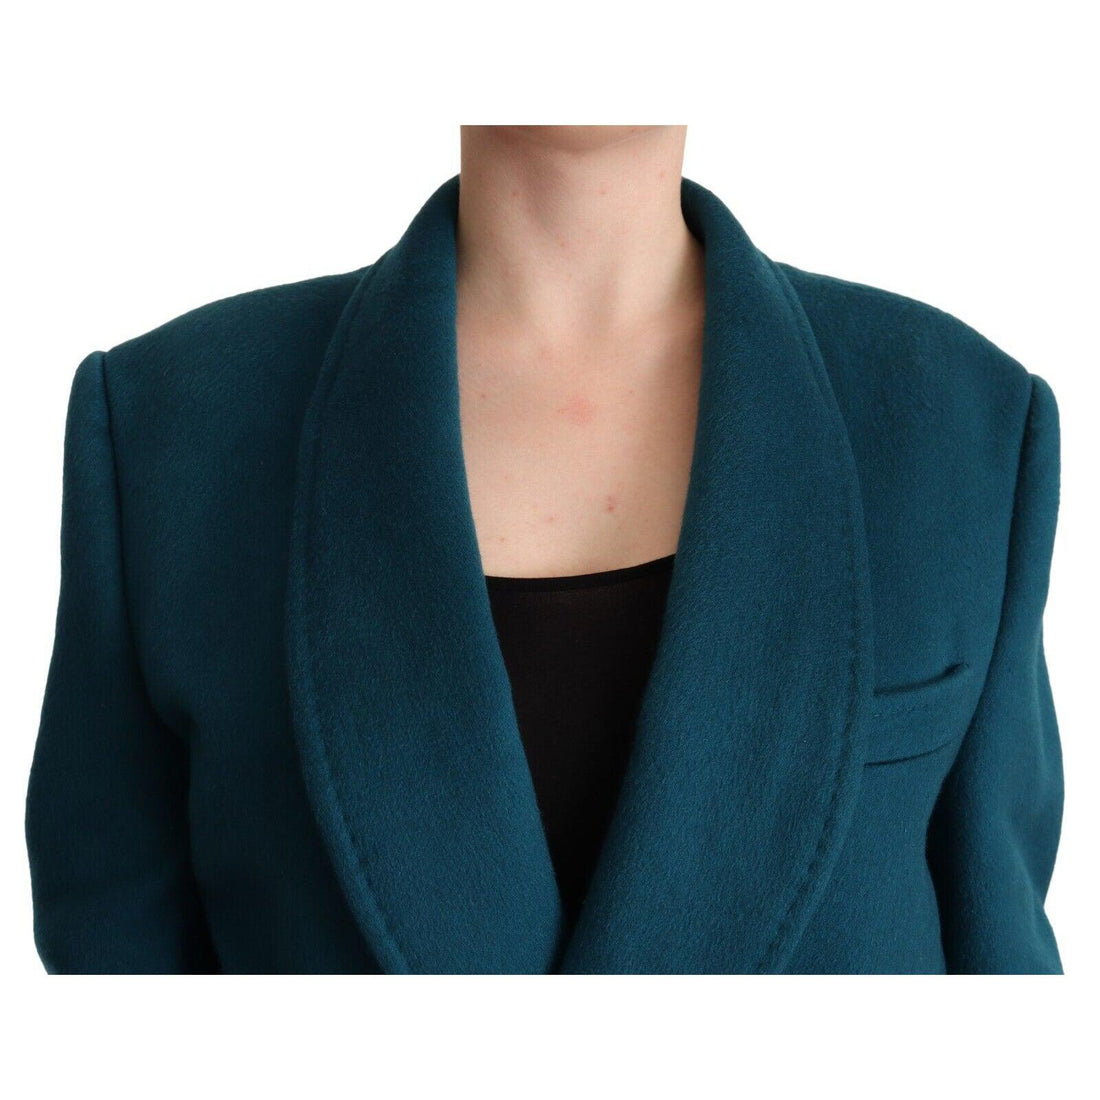 Dolce & Gabbana Elegant Blue Green Wool-Anogra Wrap Coat